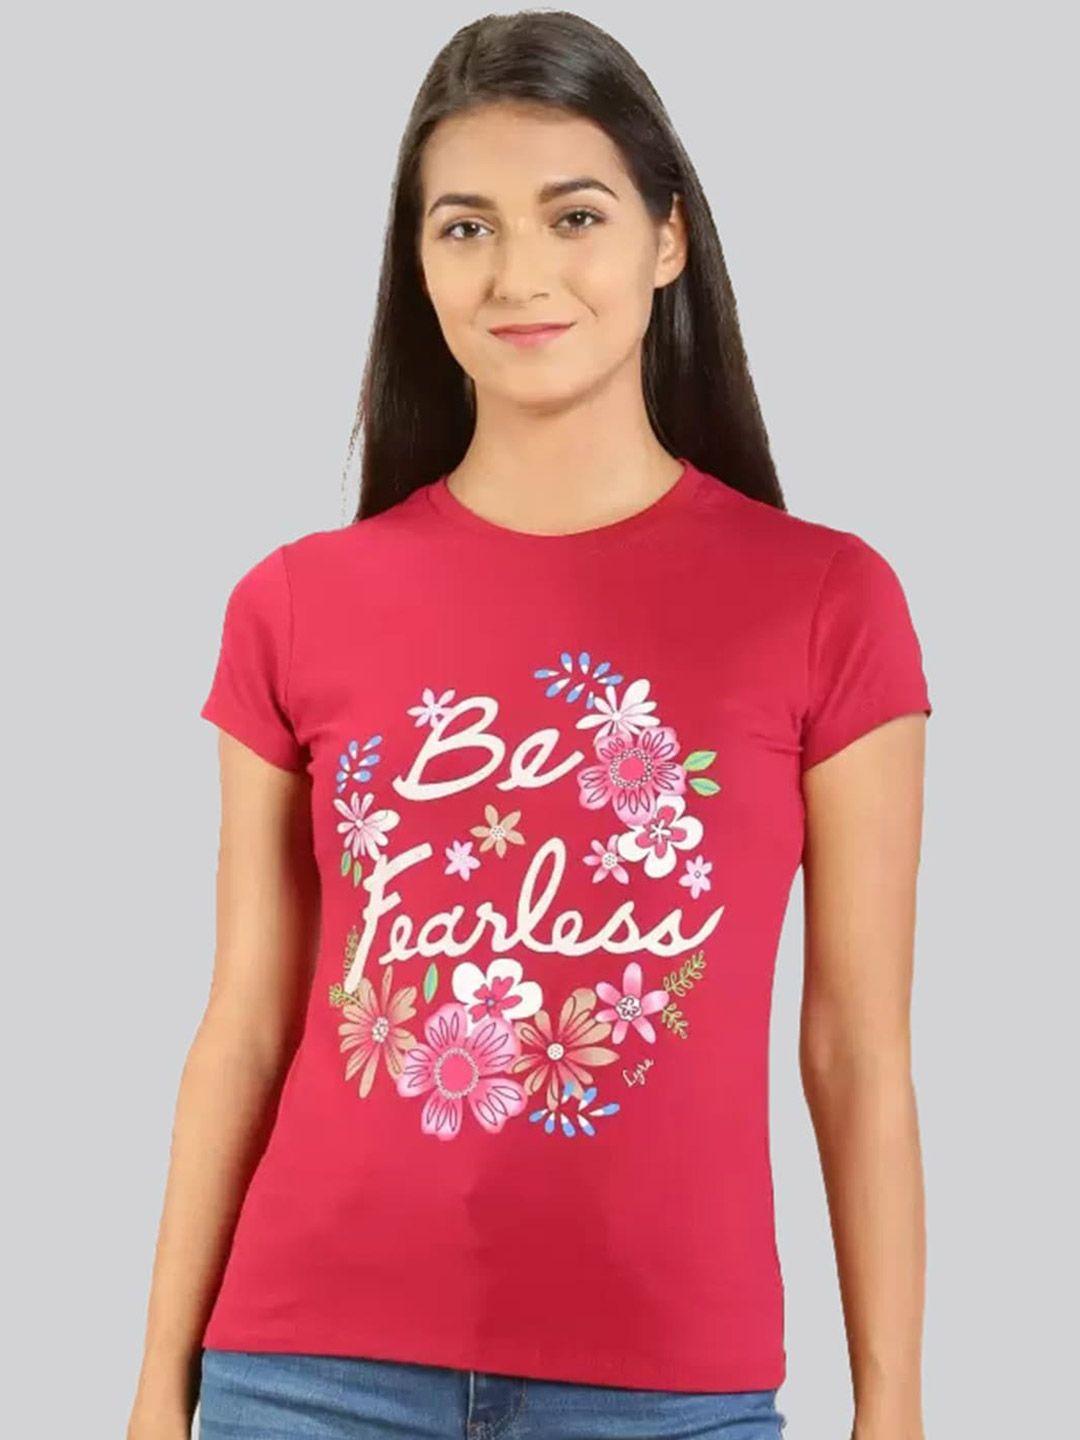 lyra-women-floral-printed-cotton-t-shirt